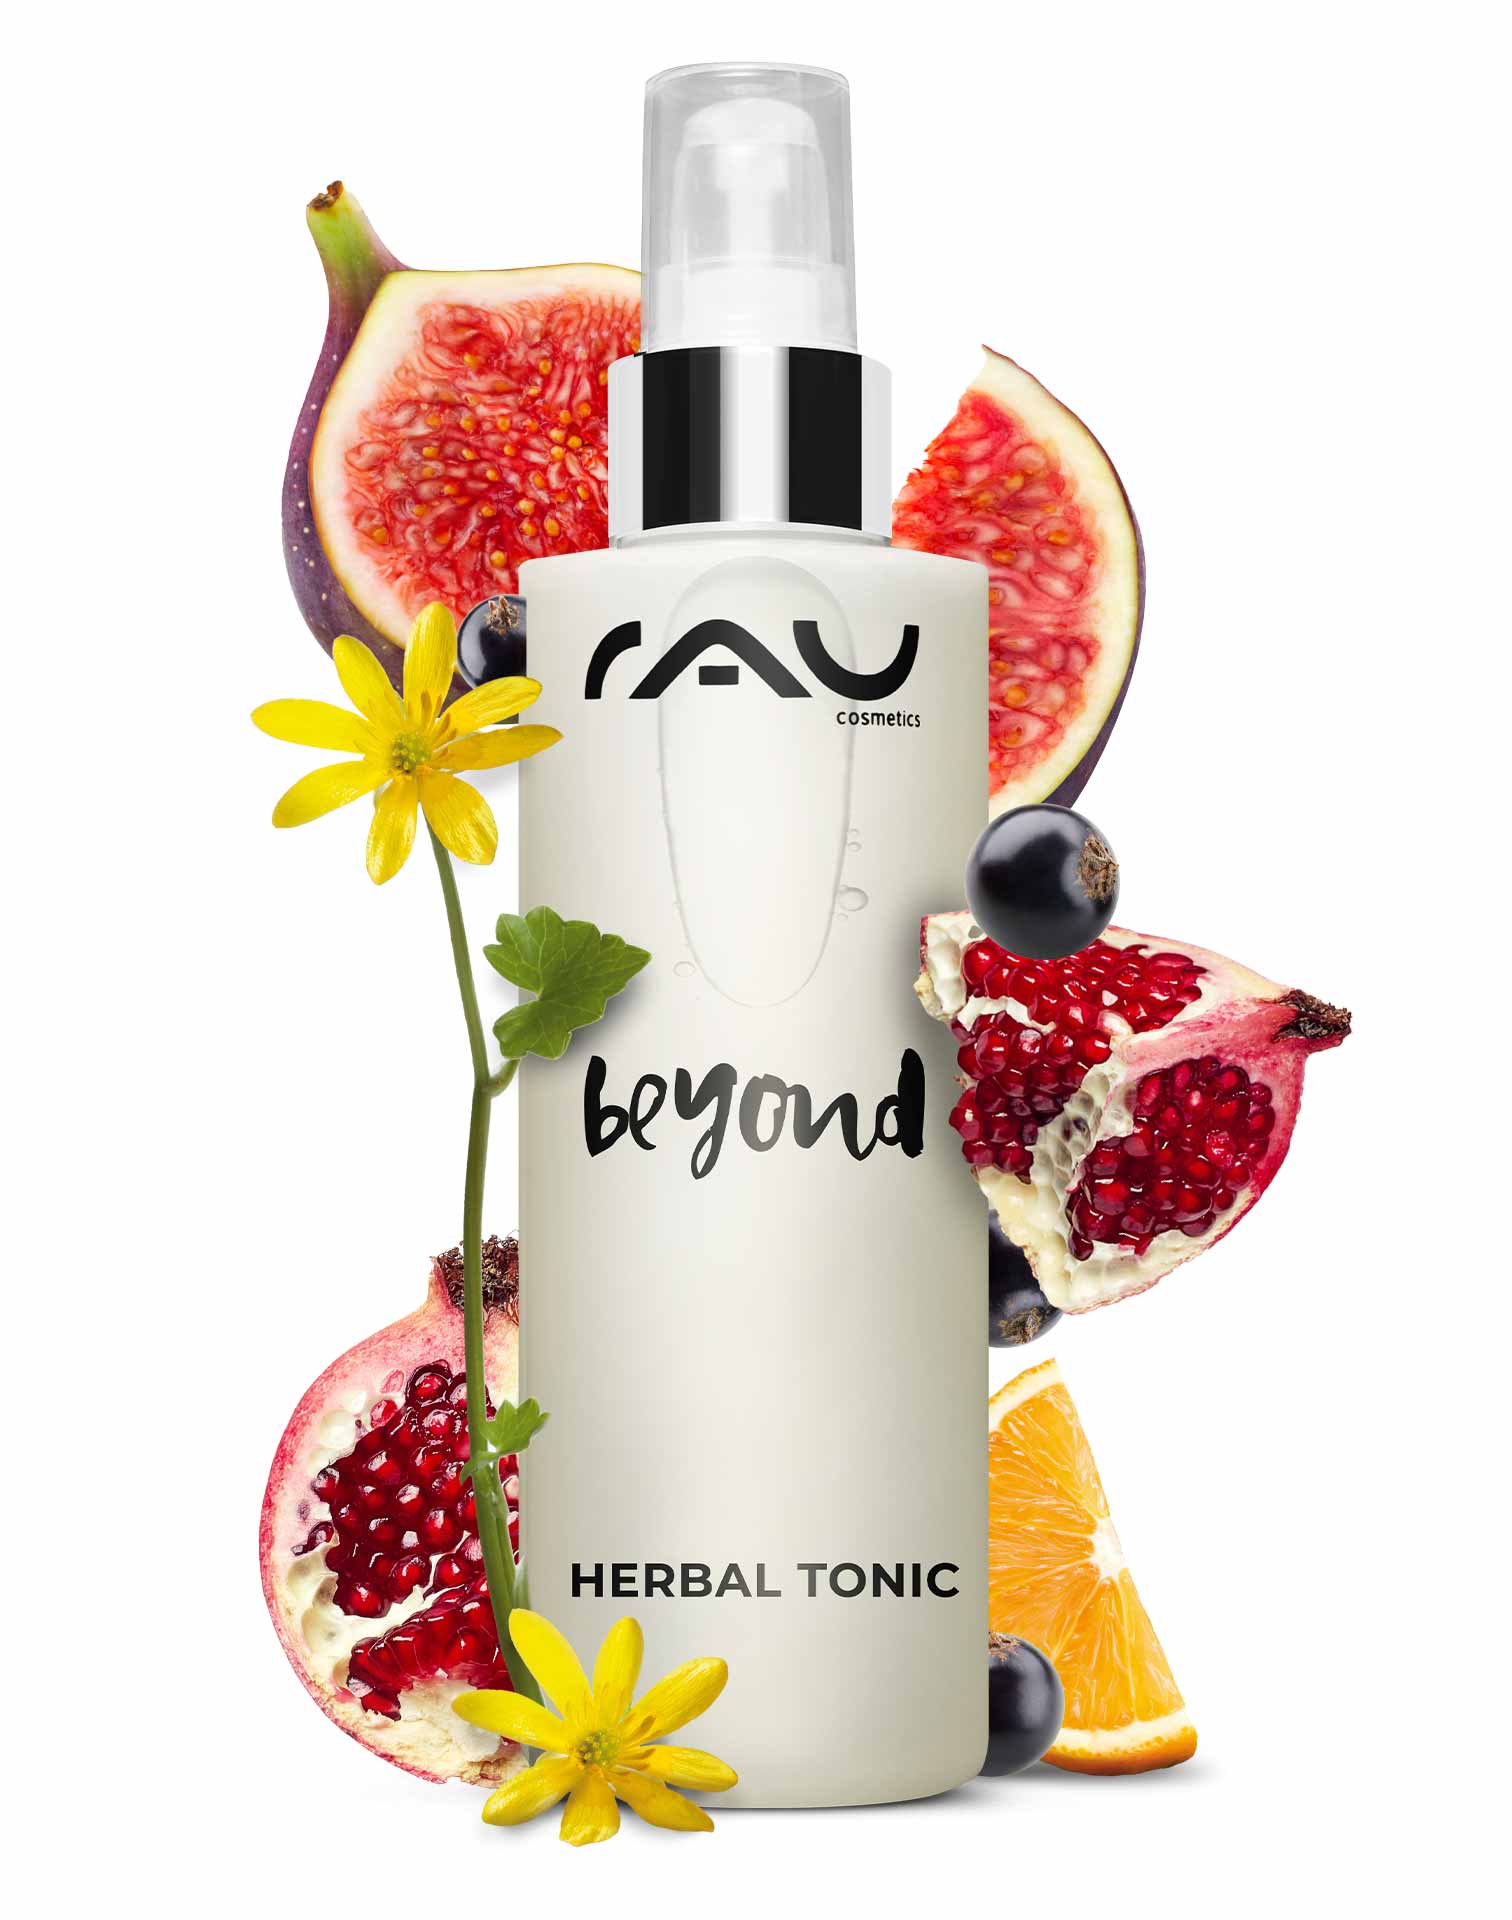 Beyond Herbal Tonic 200 ml Tonico cosmetico naturale